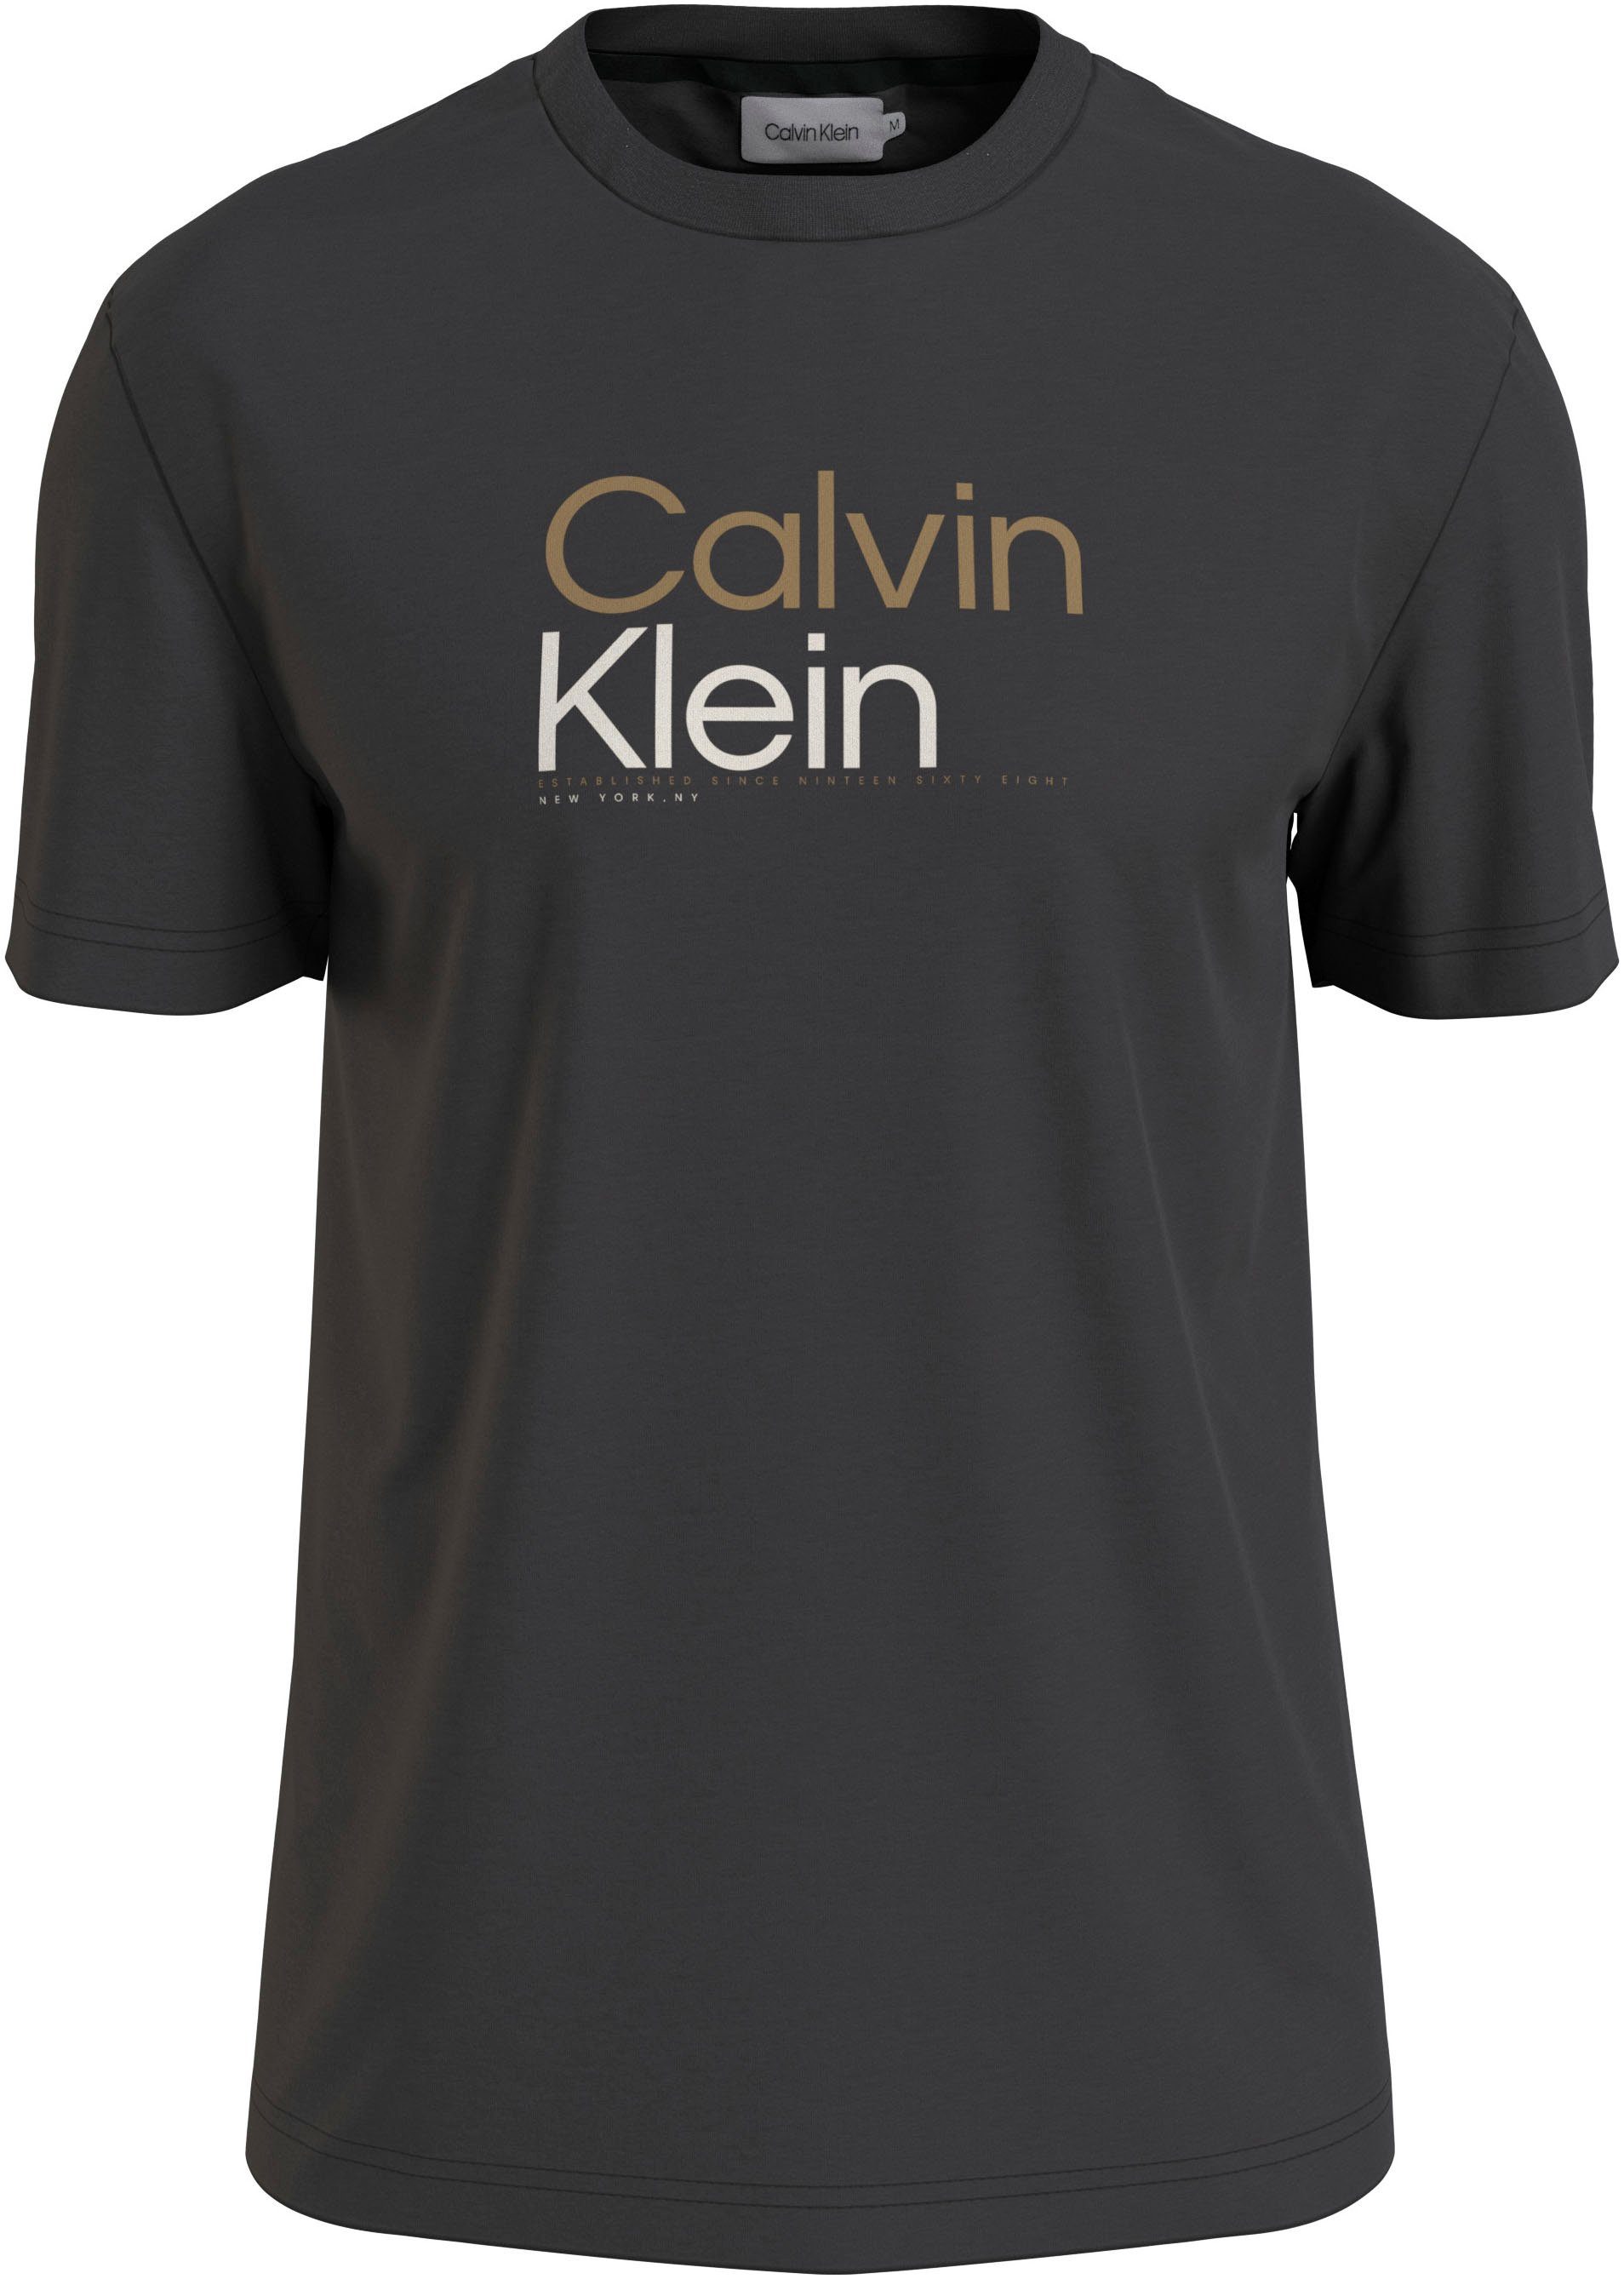 COLOR BT_MULTI Klein Calvin Ck Black LOGO mit T-Shirt Big&Tall T-SHIRT Markenlabel